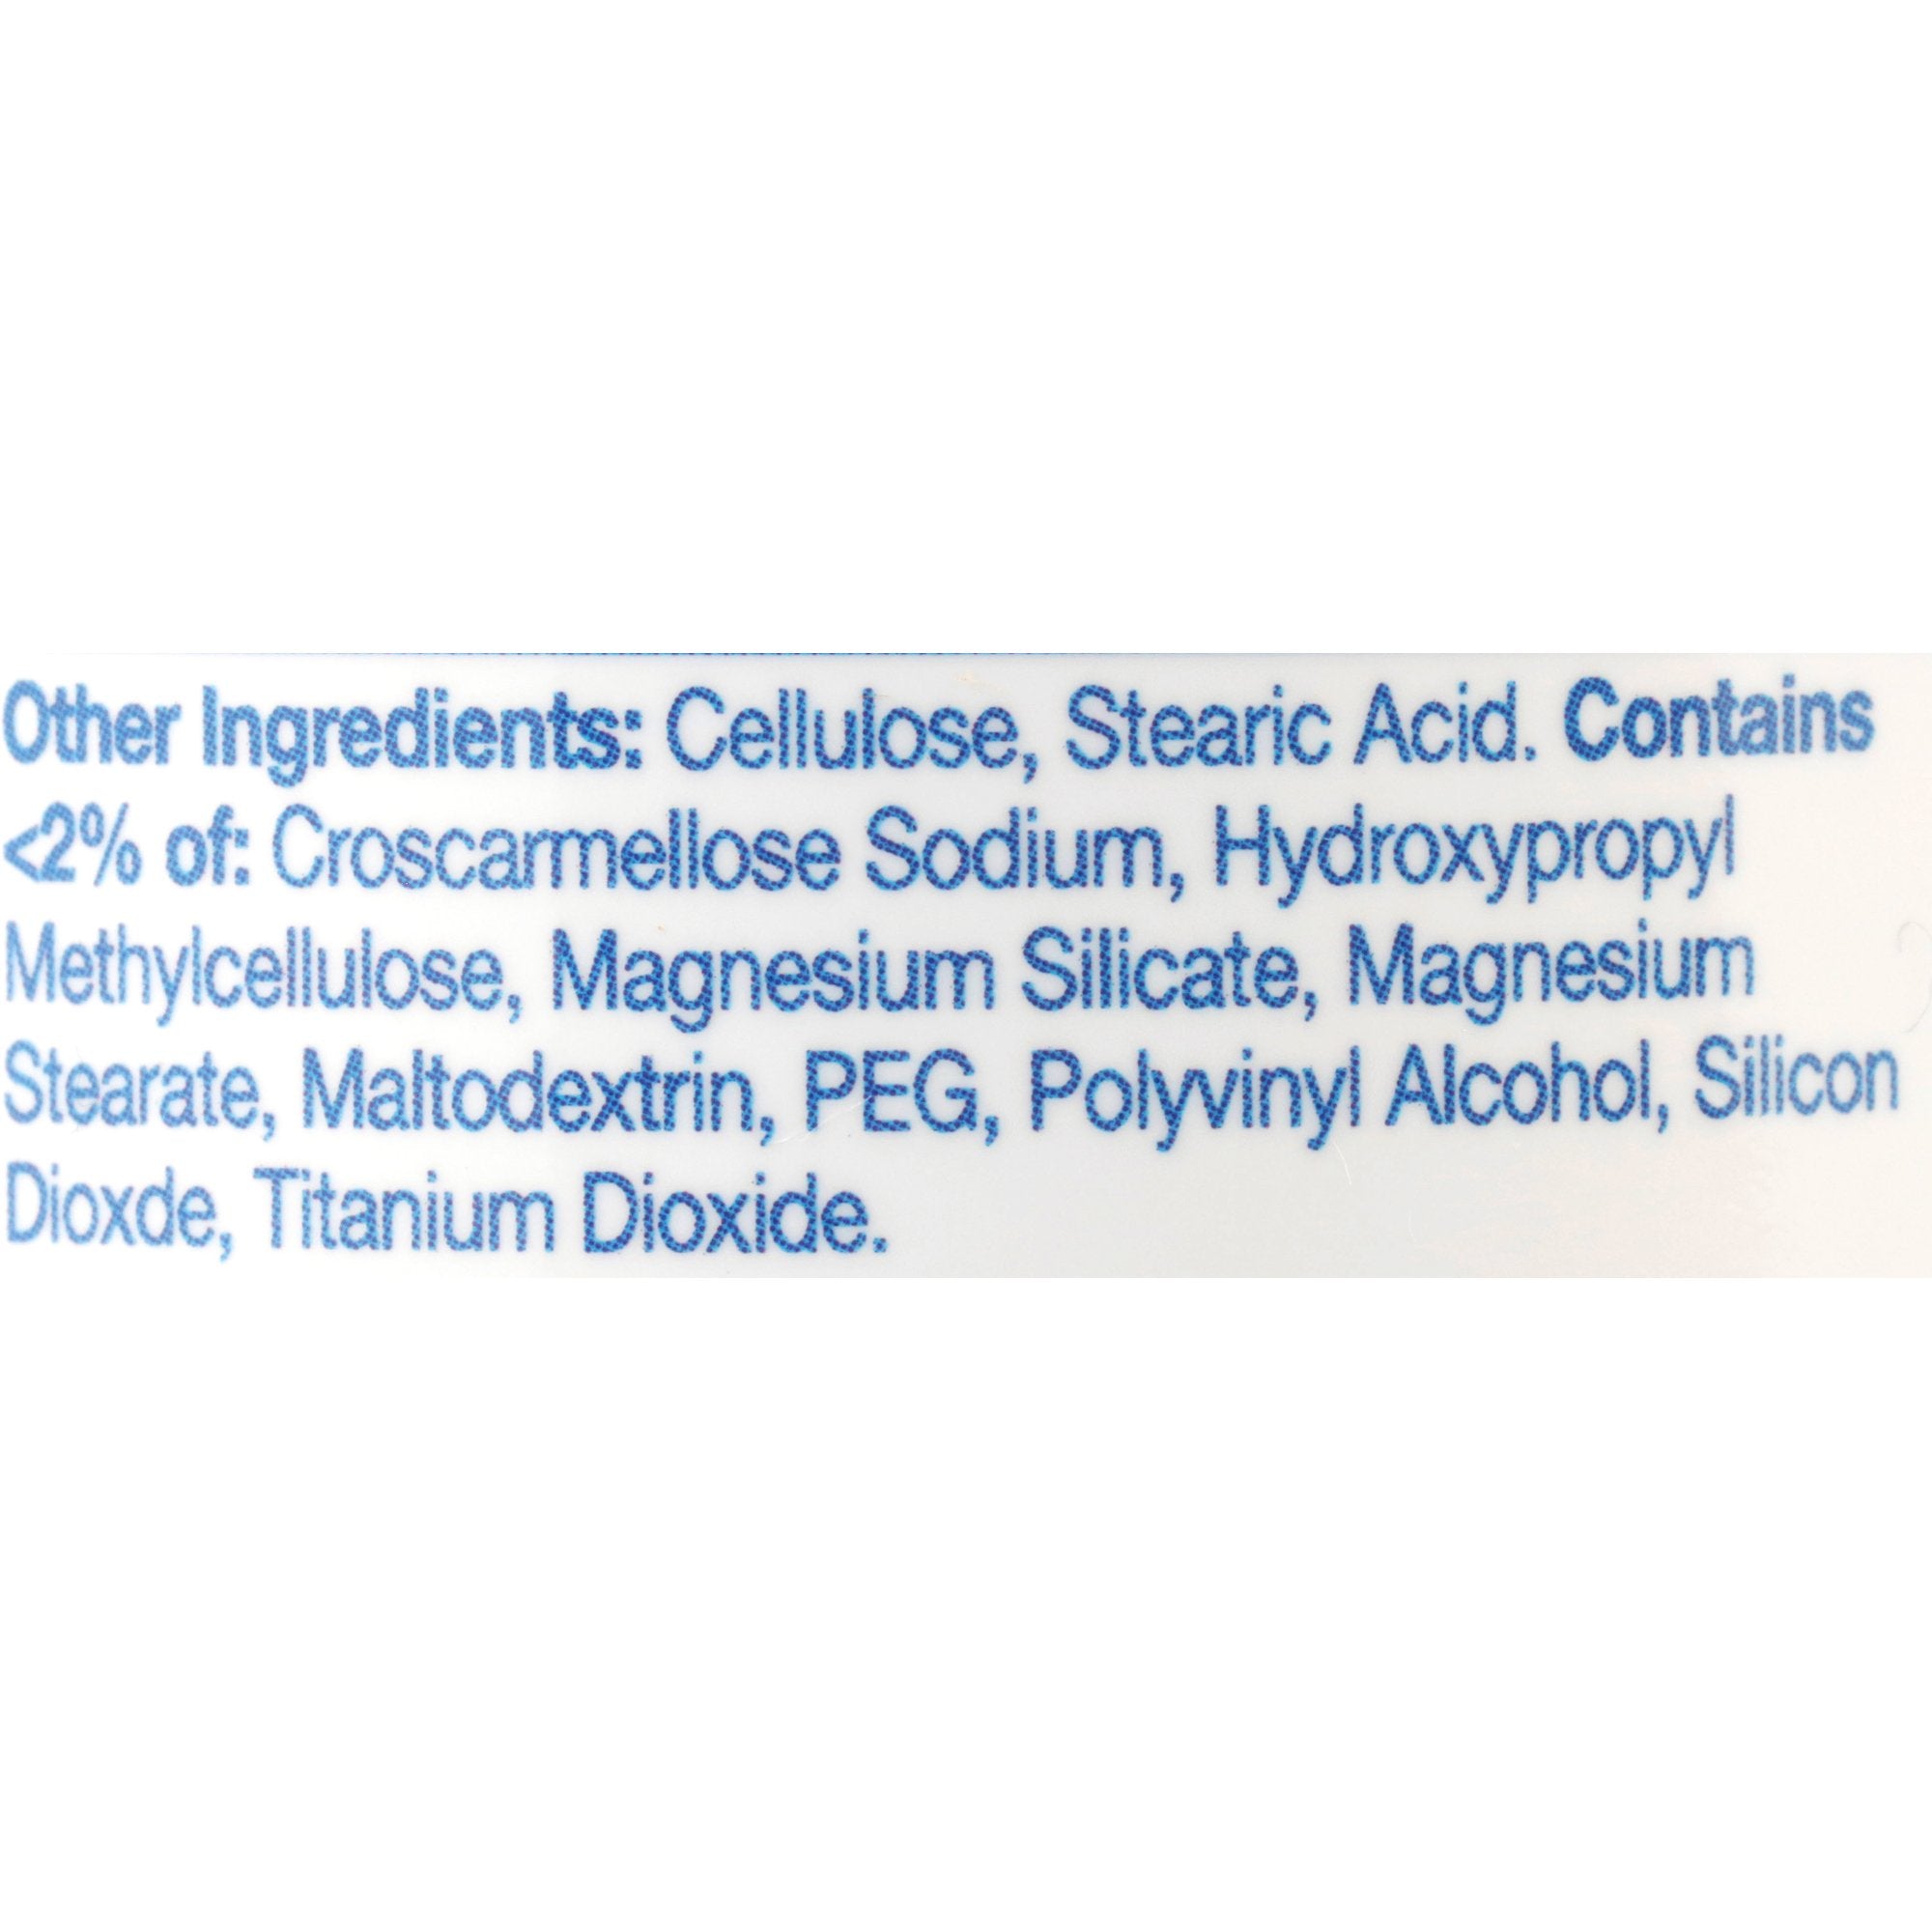 Mineral Supplement sunmark Zinc Gluconate 50 mg Strength Tablet 100 per Bottle Unflavored